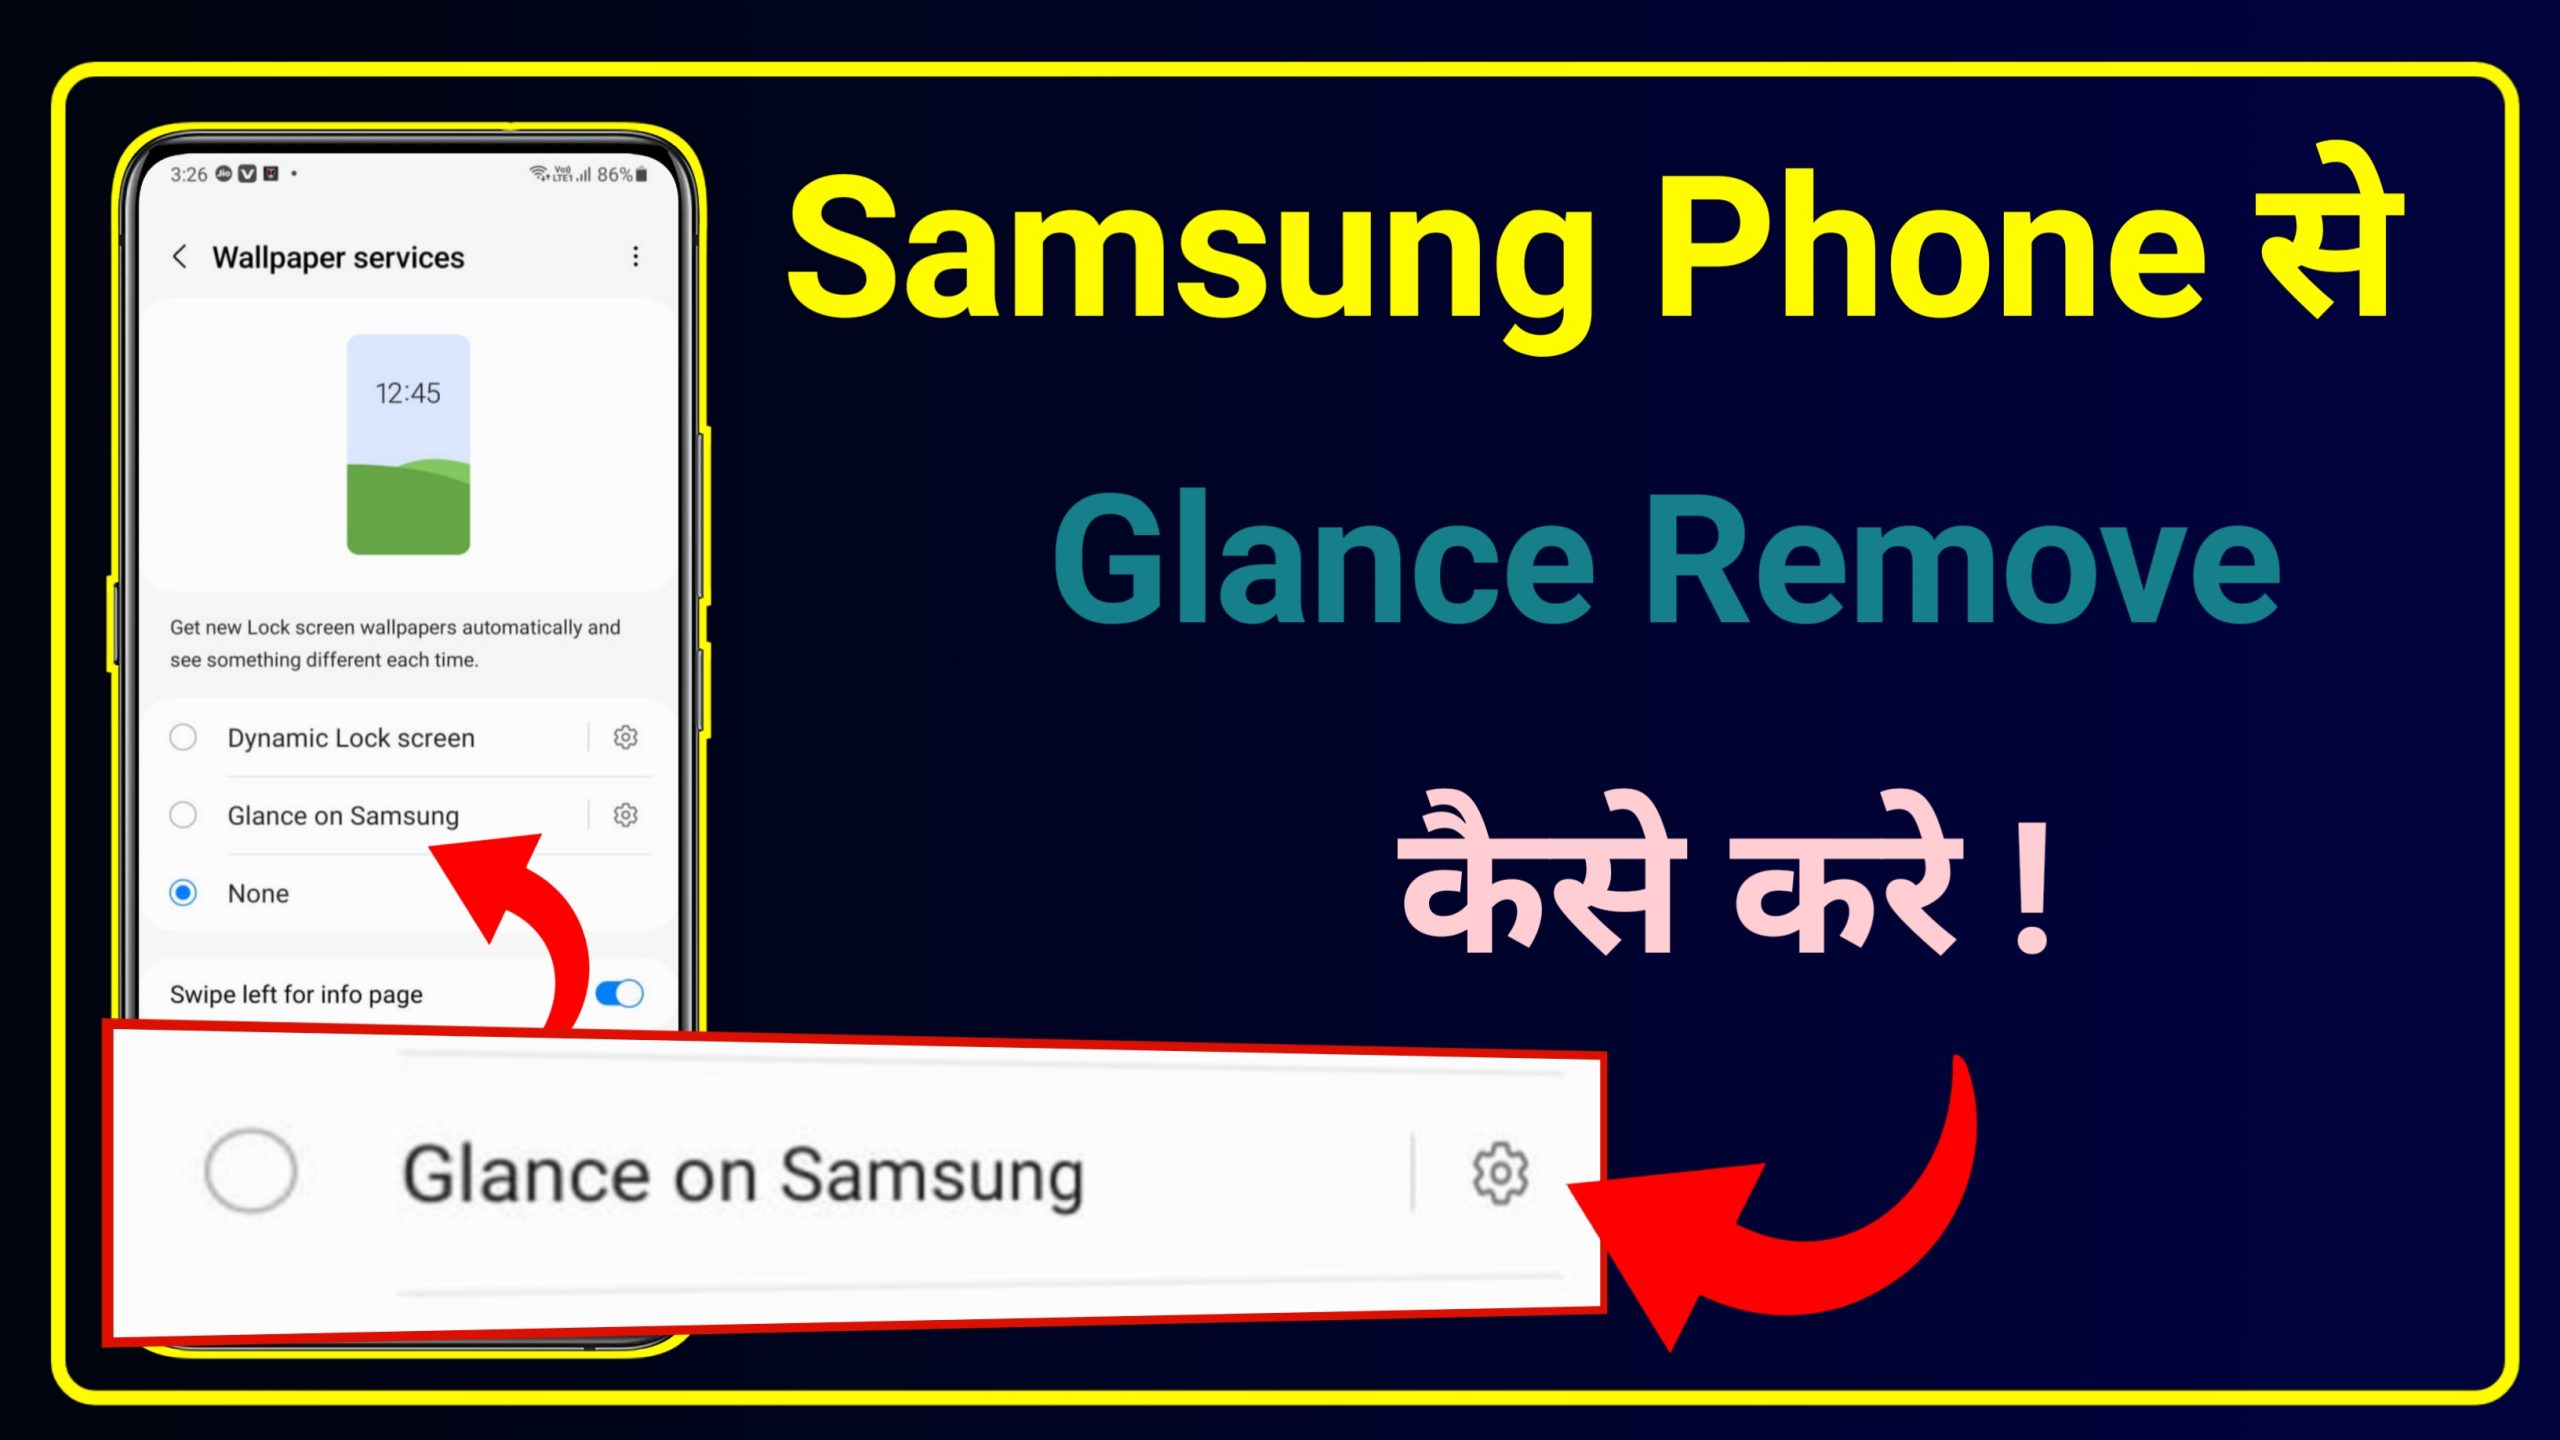 Glance Kya Hai in Hindi? | Samsung Phone se Glance Remove Kaise kare?